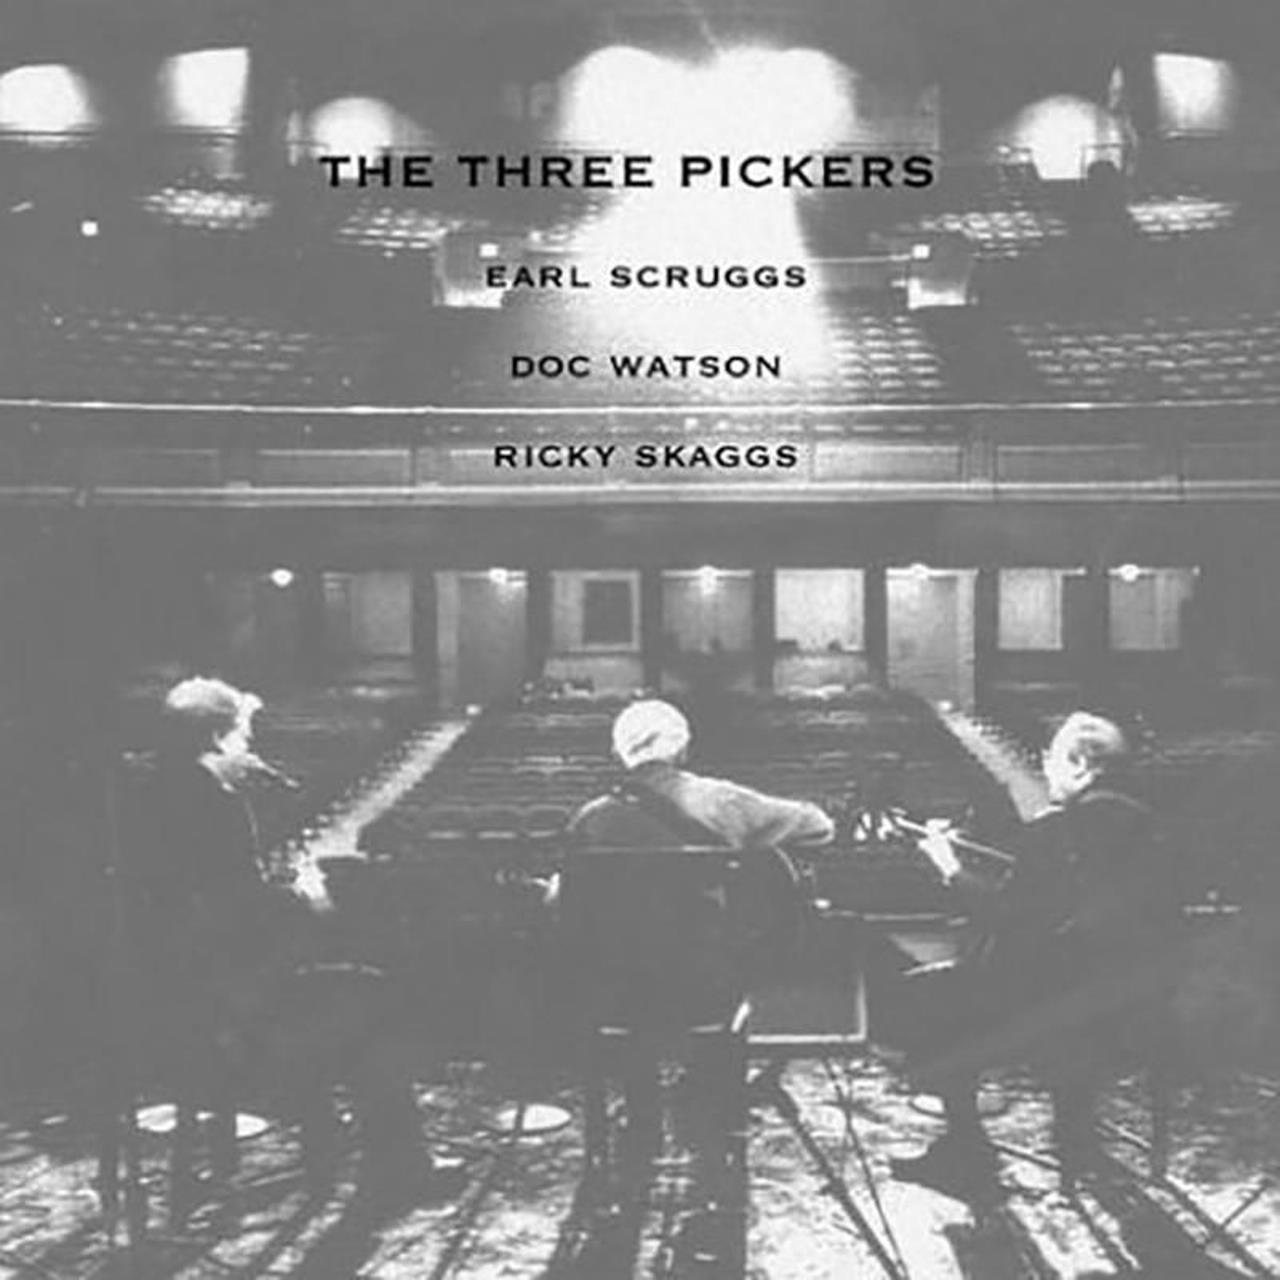 Earl Scruggs, Doc Watson, Ricky Skaggs – The Three Pickers cover album